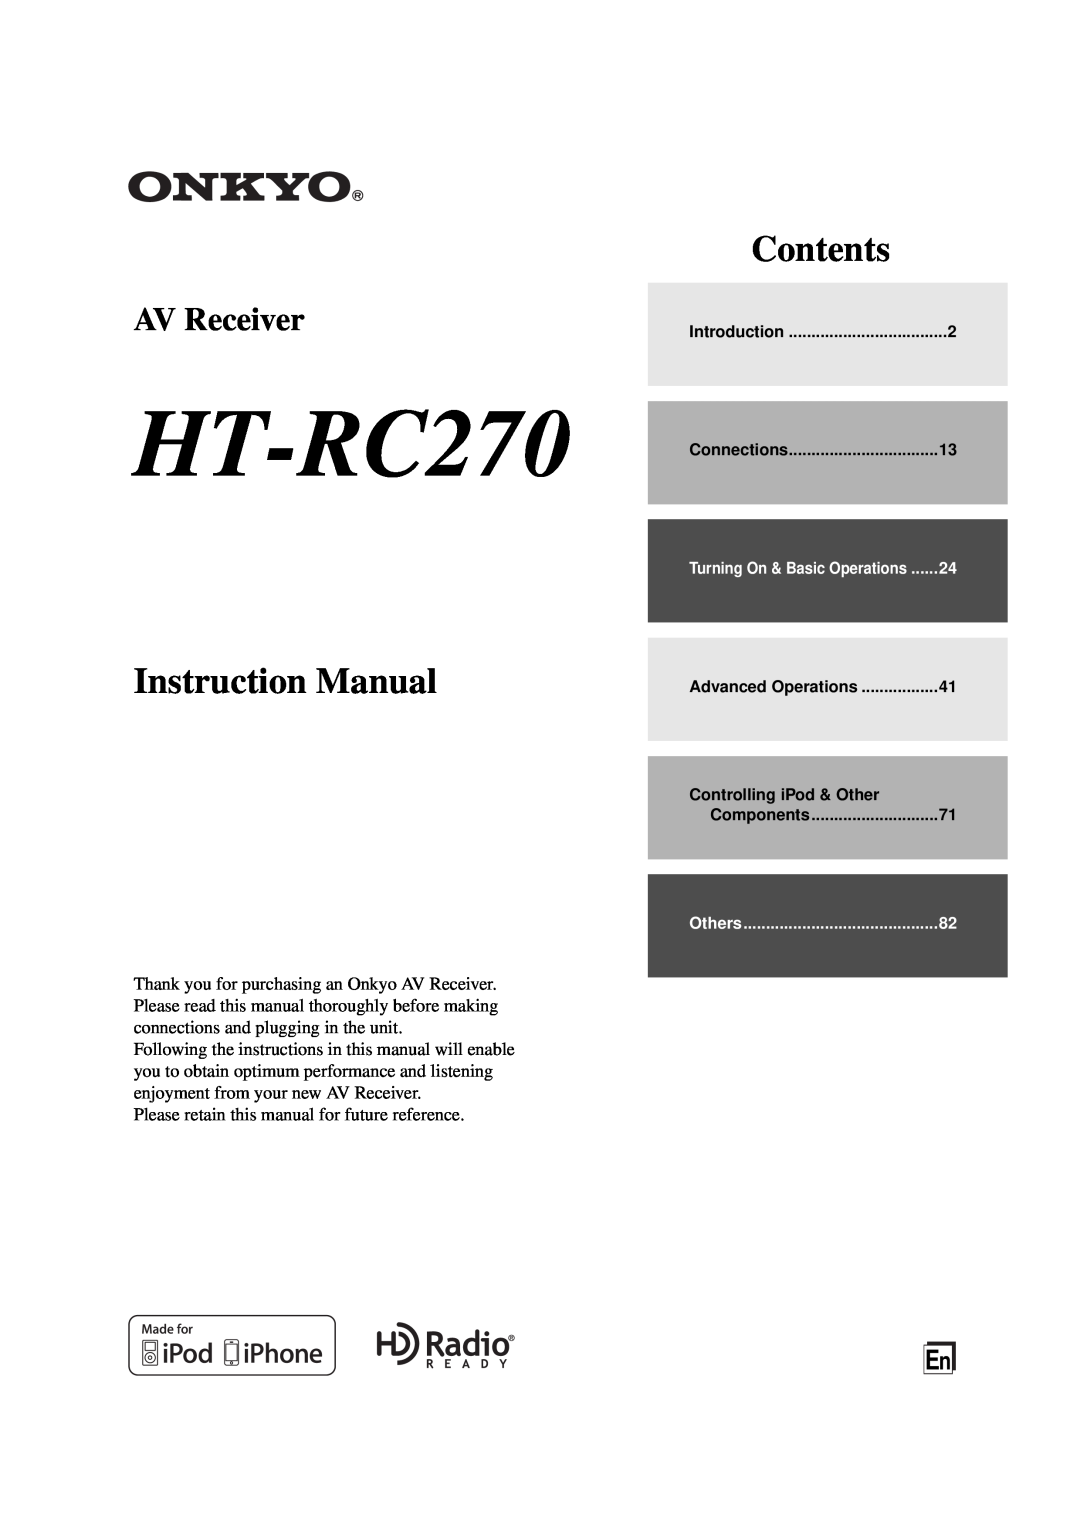 Onkyo HT-RC270 instruction manual Instruction Manual, Contents, AV Receiver 